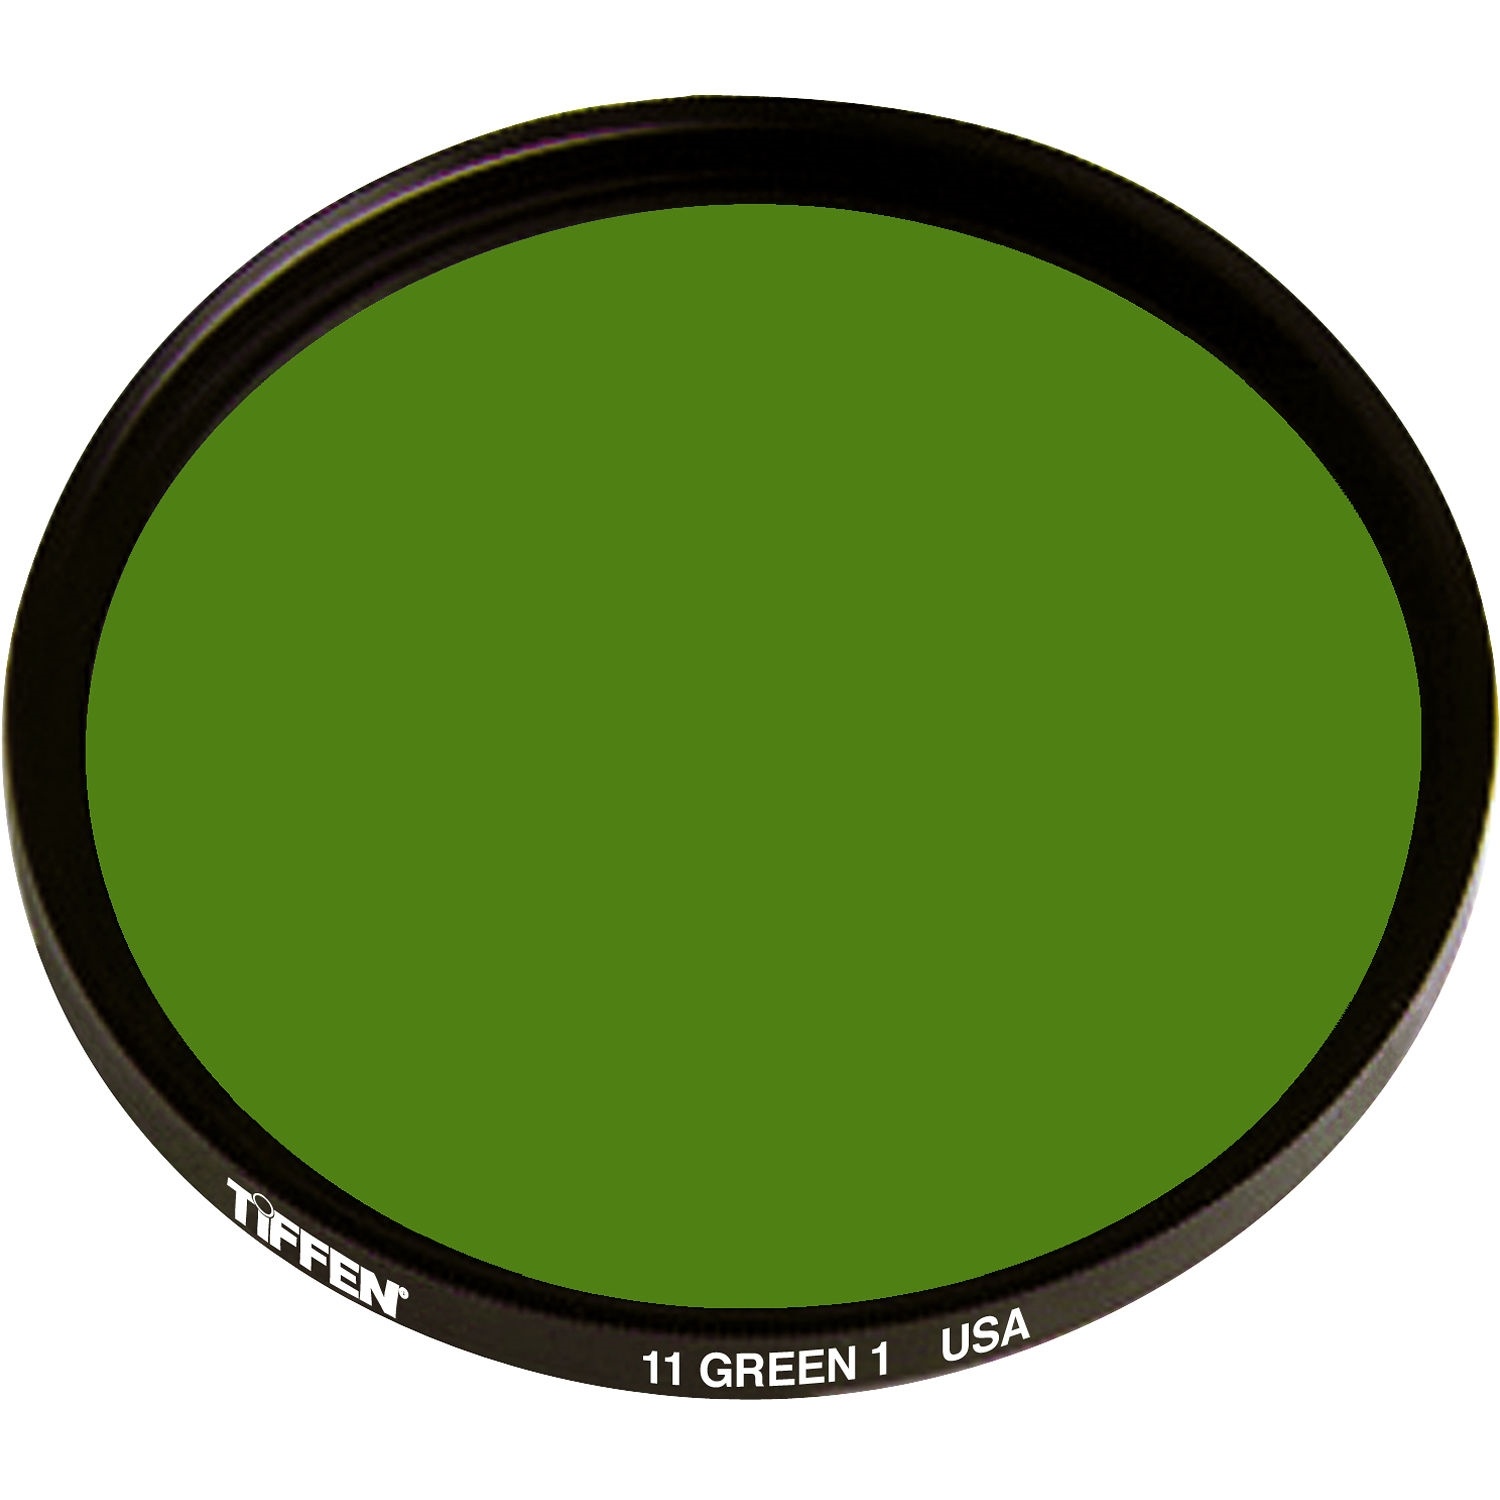 Tiffen 11 Green (1) Filter (58mm)